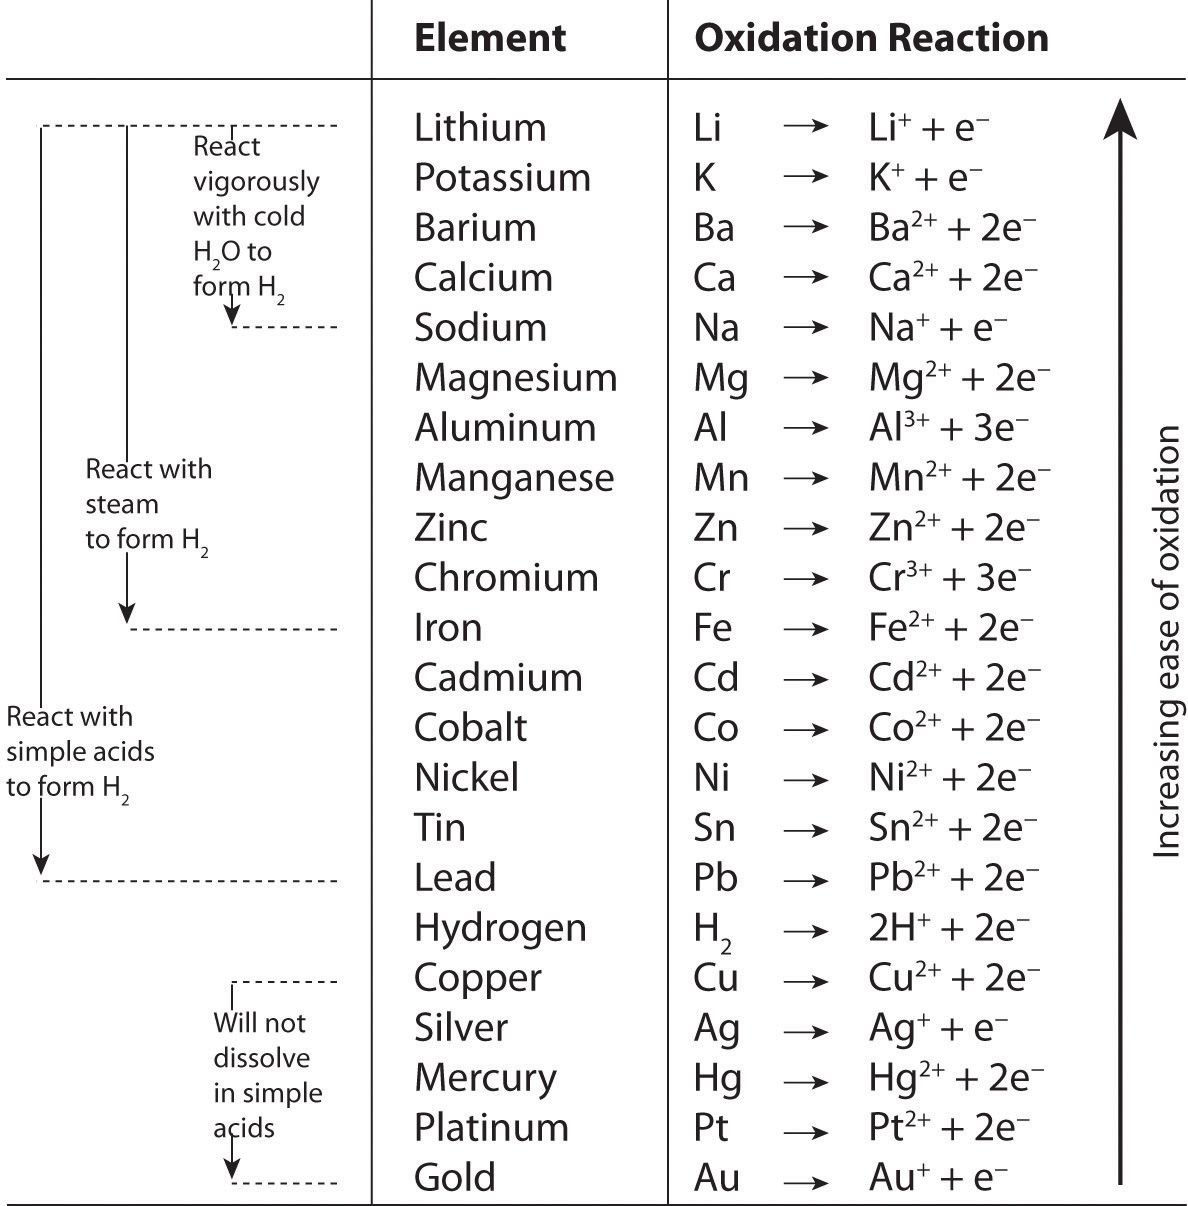 A chart of ease of oxidation. From least to most ease, the chart shows Gold, Platinum, Mercury, Silver, Copper, Hydrogen, Lead, Tin, Nickel, Cobalt, Cadmium, Iron, Chromium, Zinc, Manganese, Aluminum, Magnesium, Sodium, Calcium, Barium, Potassium, and Lithium.